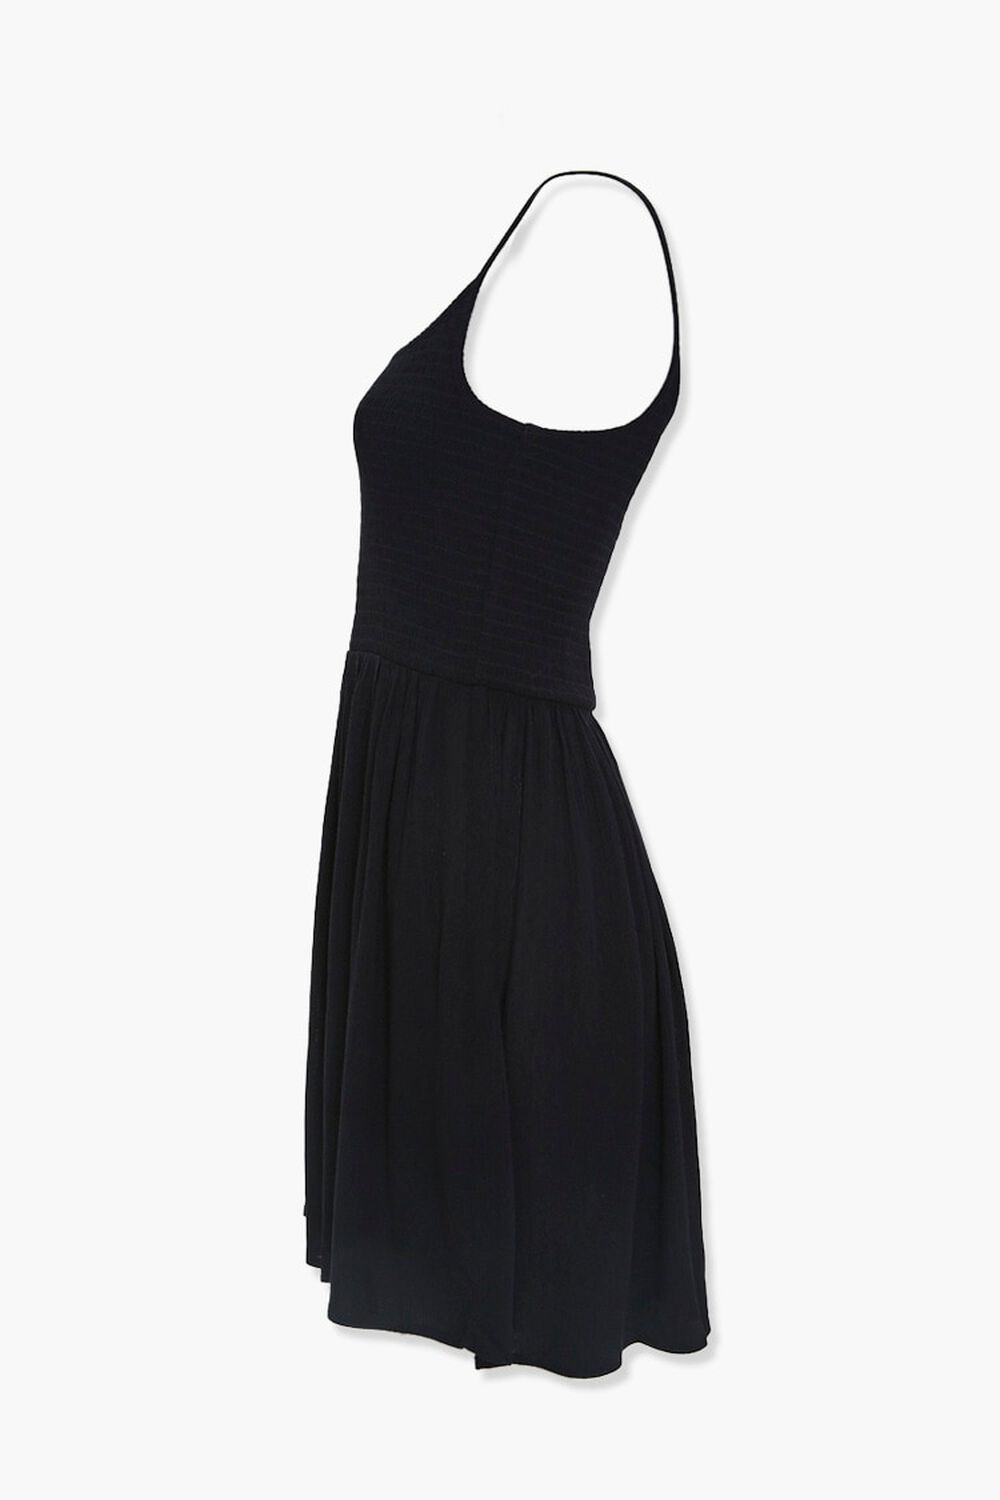 BLACK Smocked Skater Dress, image 2